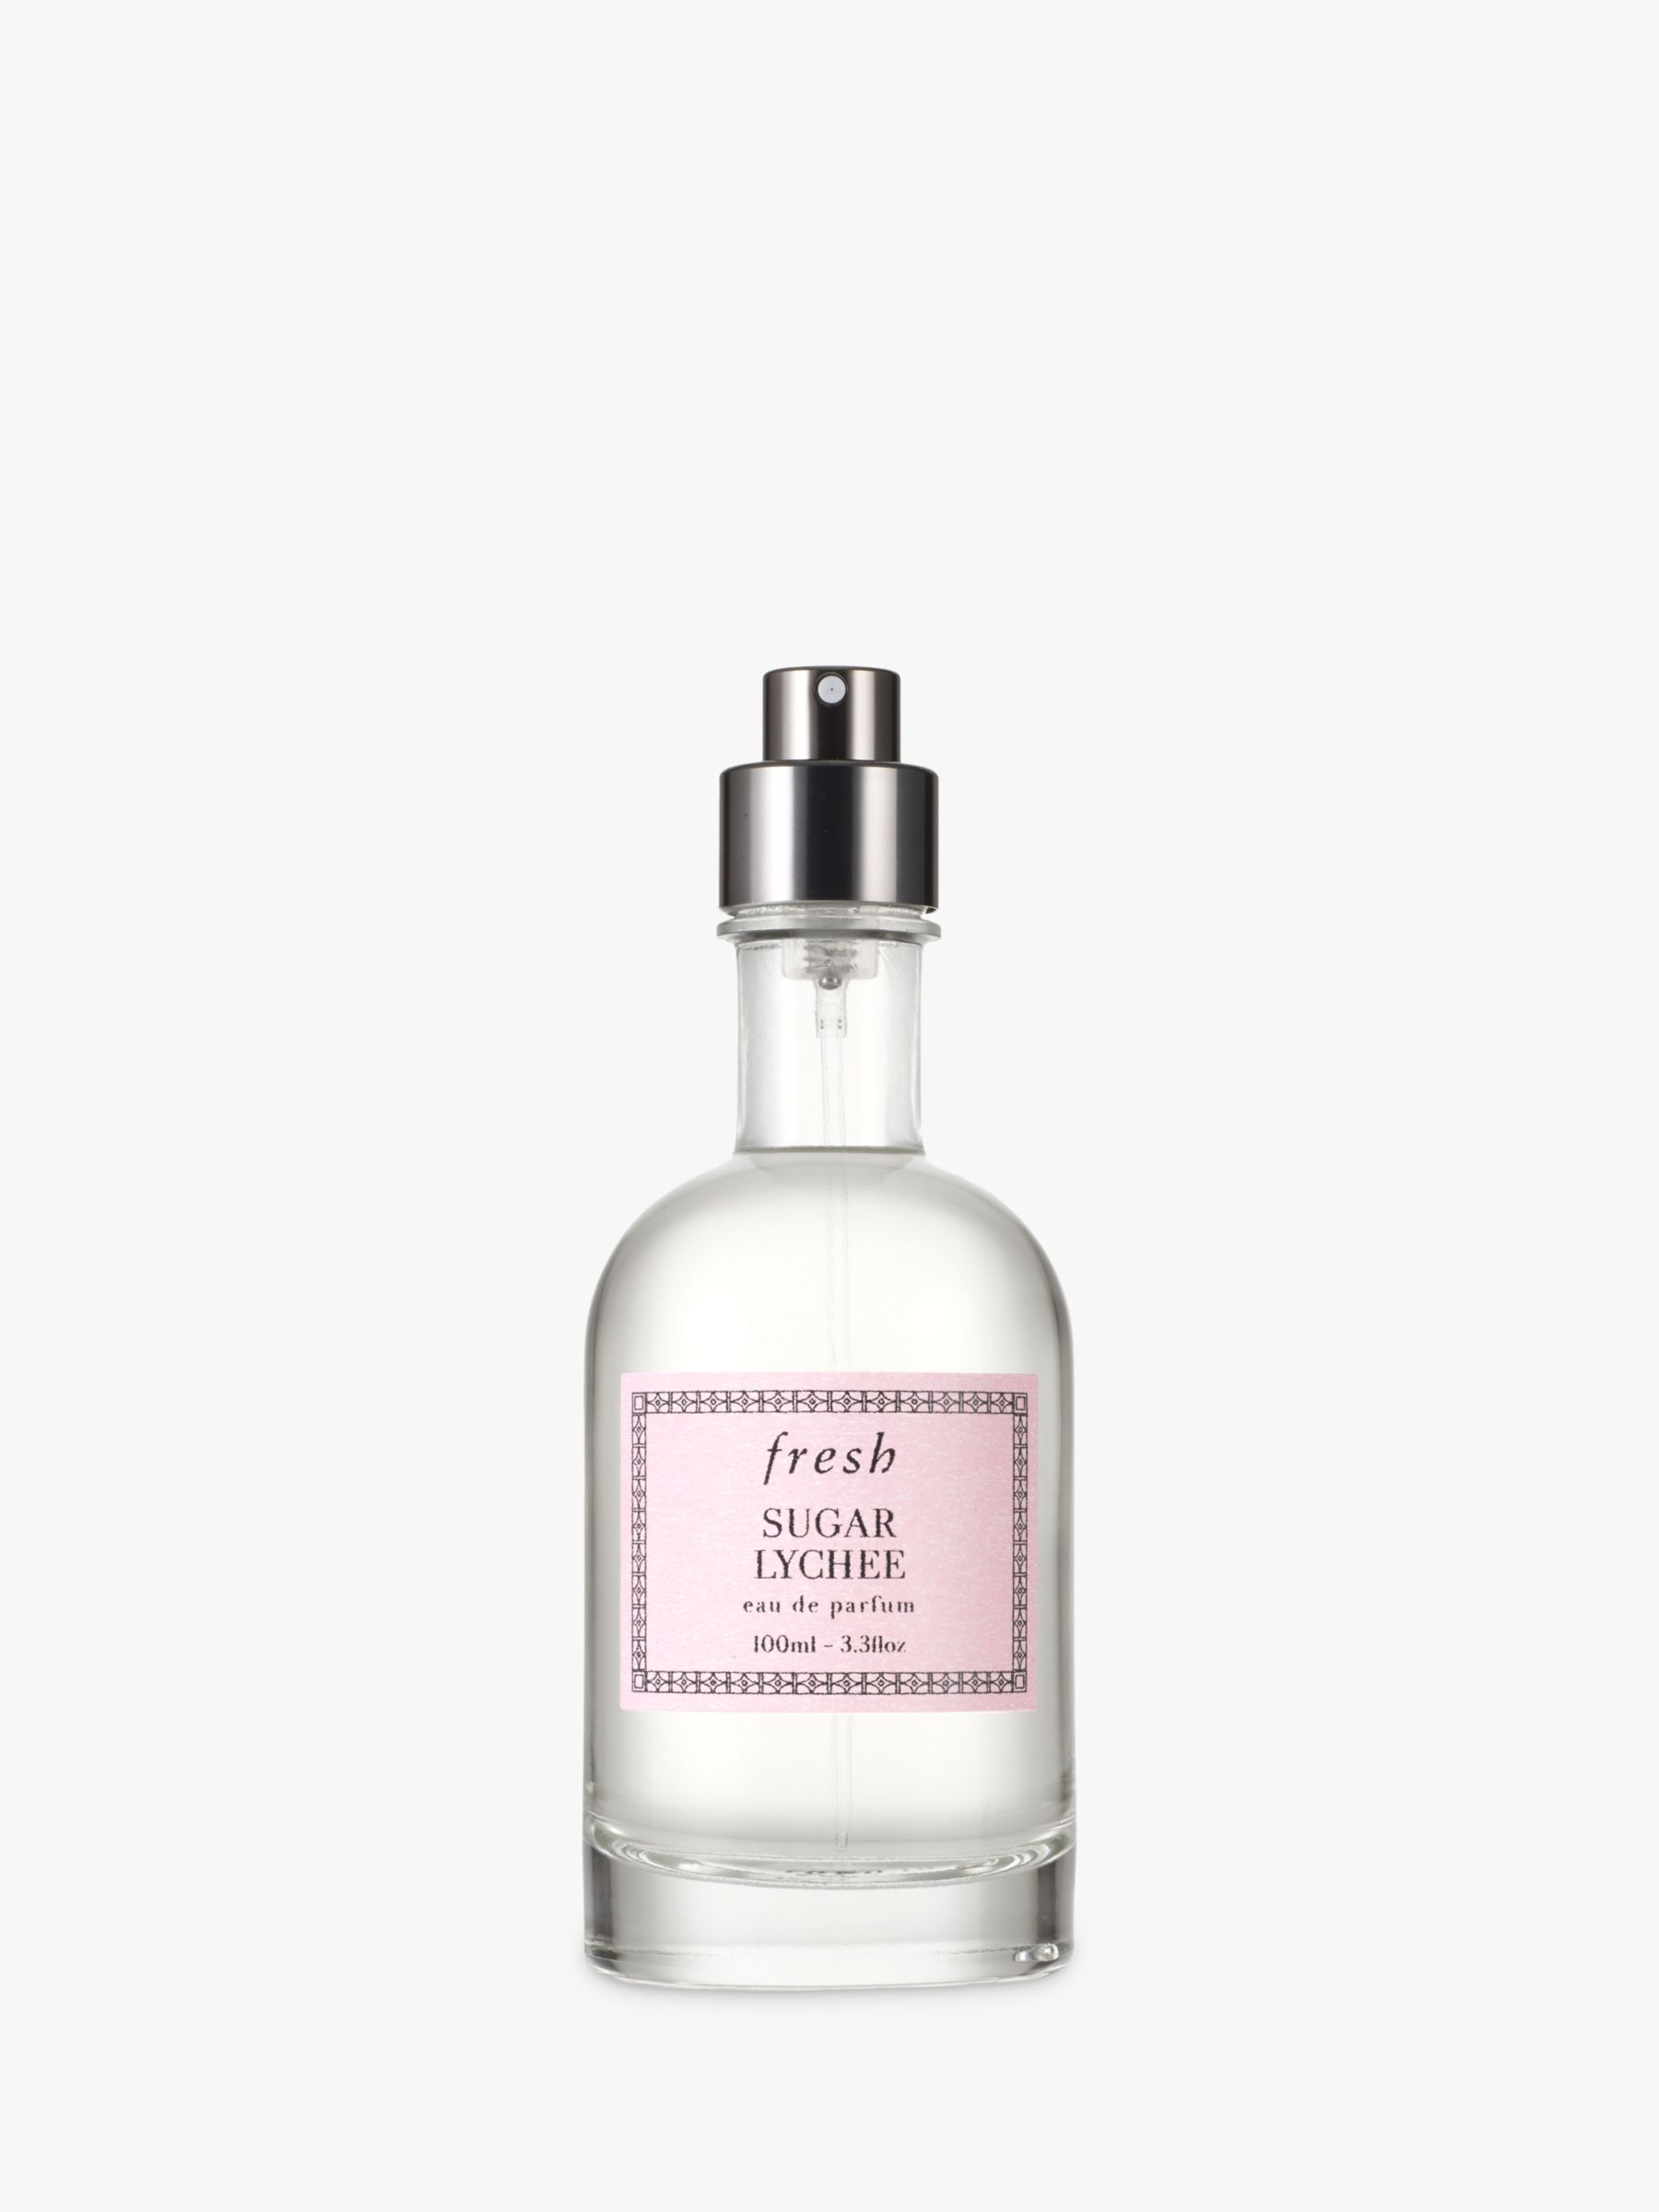 Fresh Sugar Lychee Eau de Parfum, 100ml 1